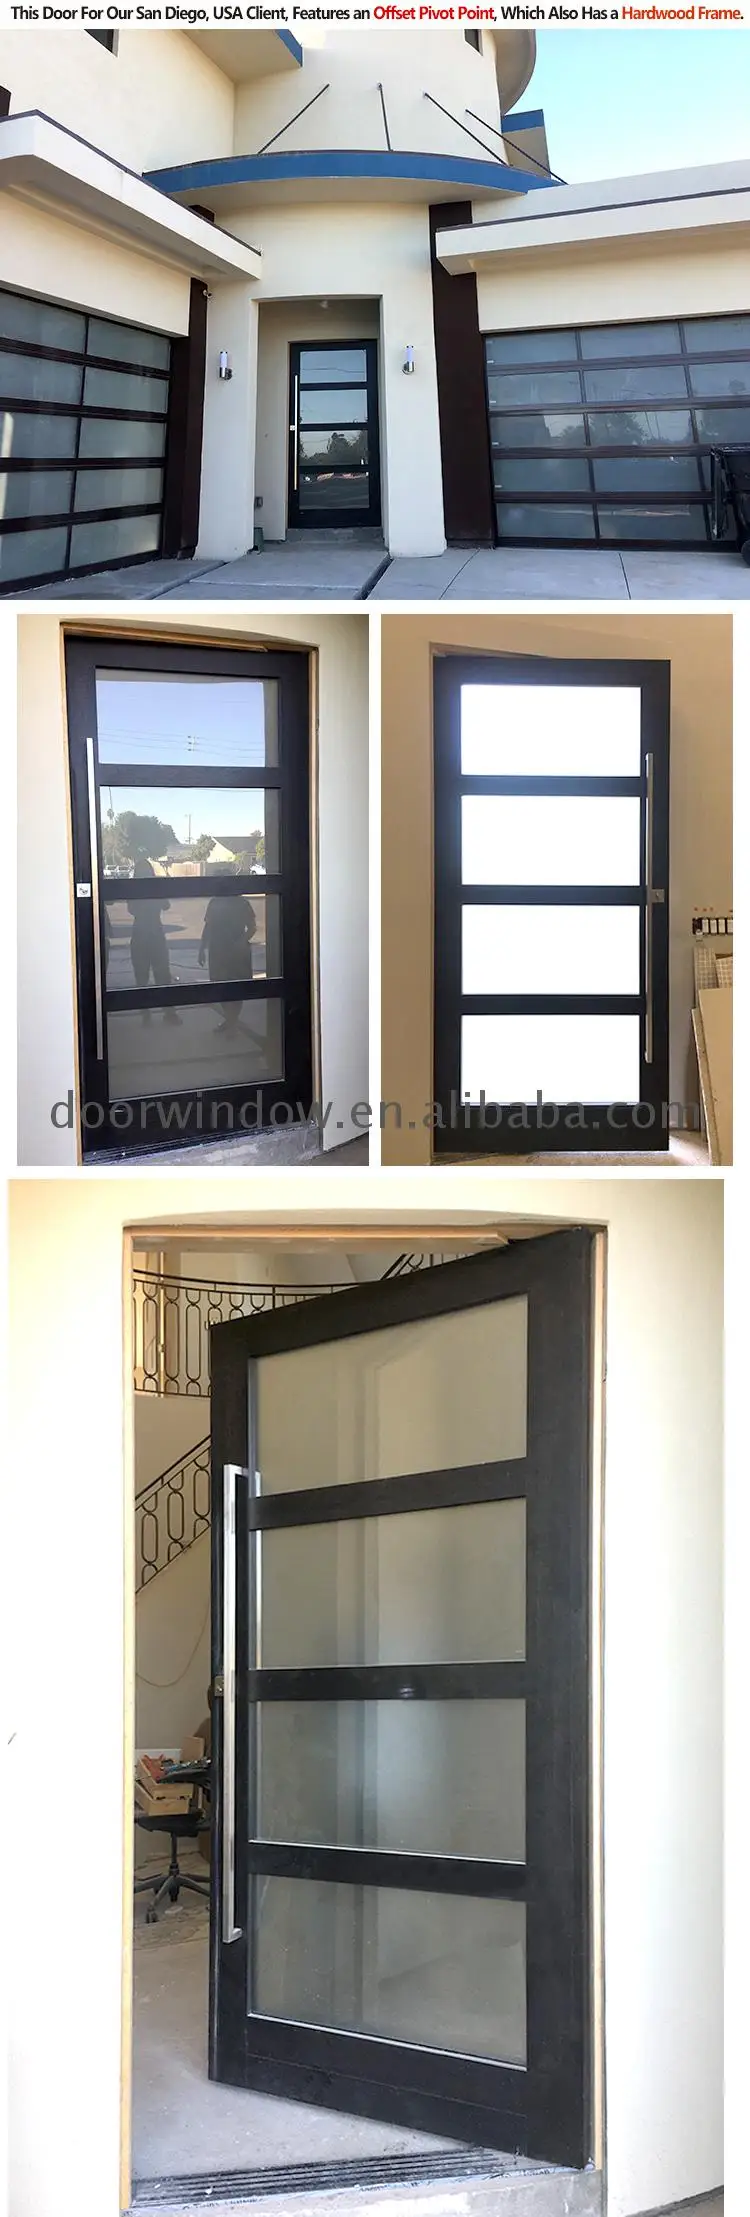 Fashion oak panel doors with glass panels